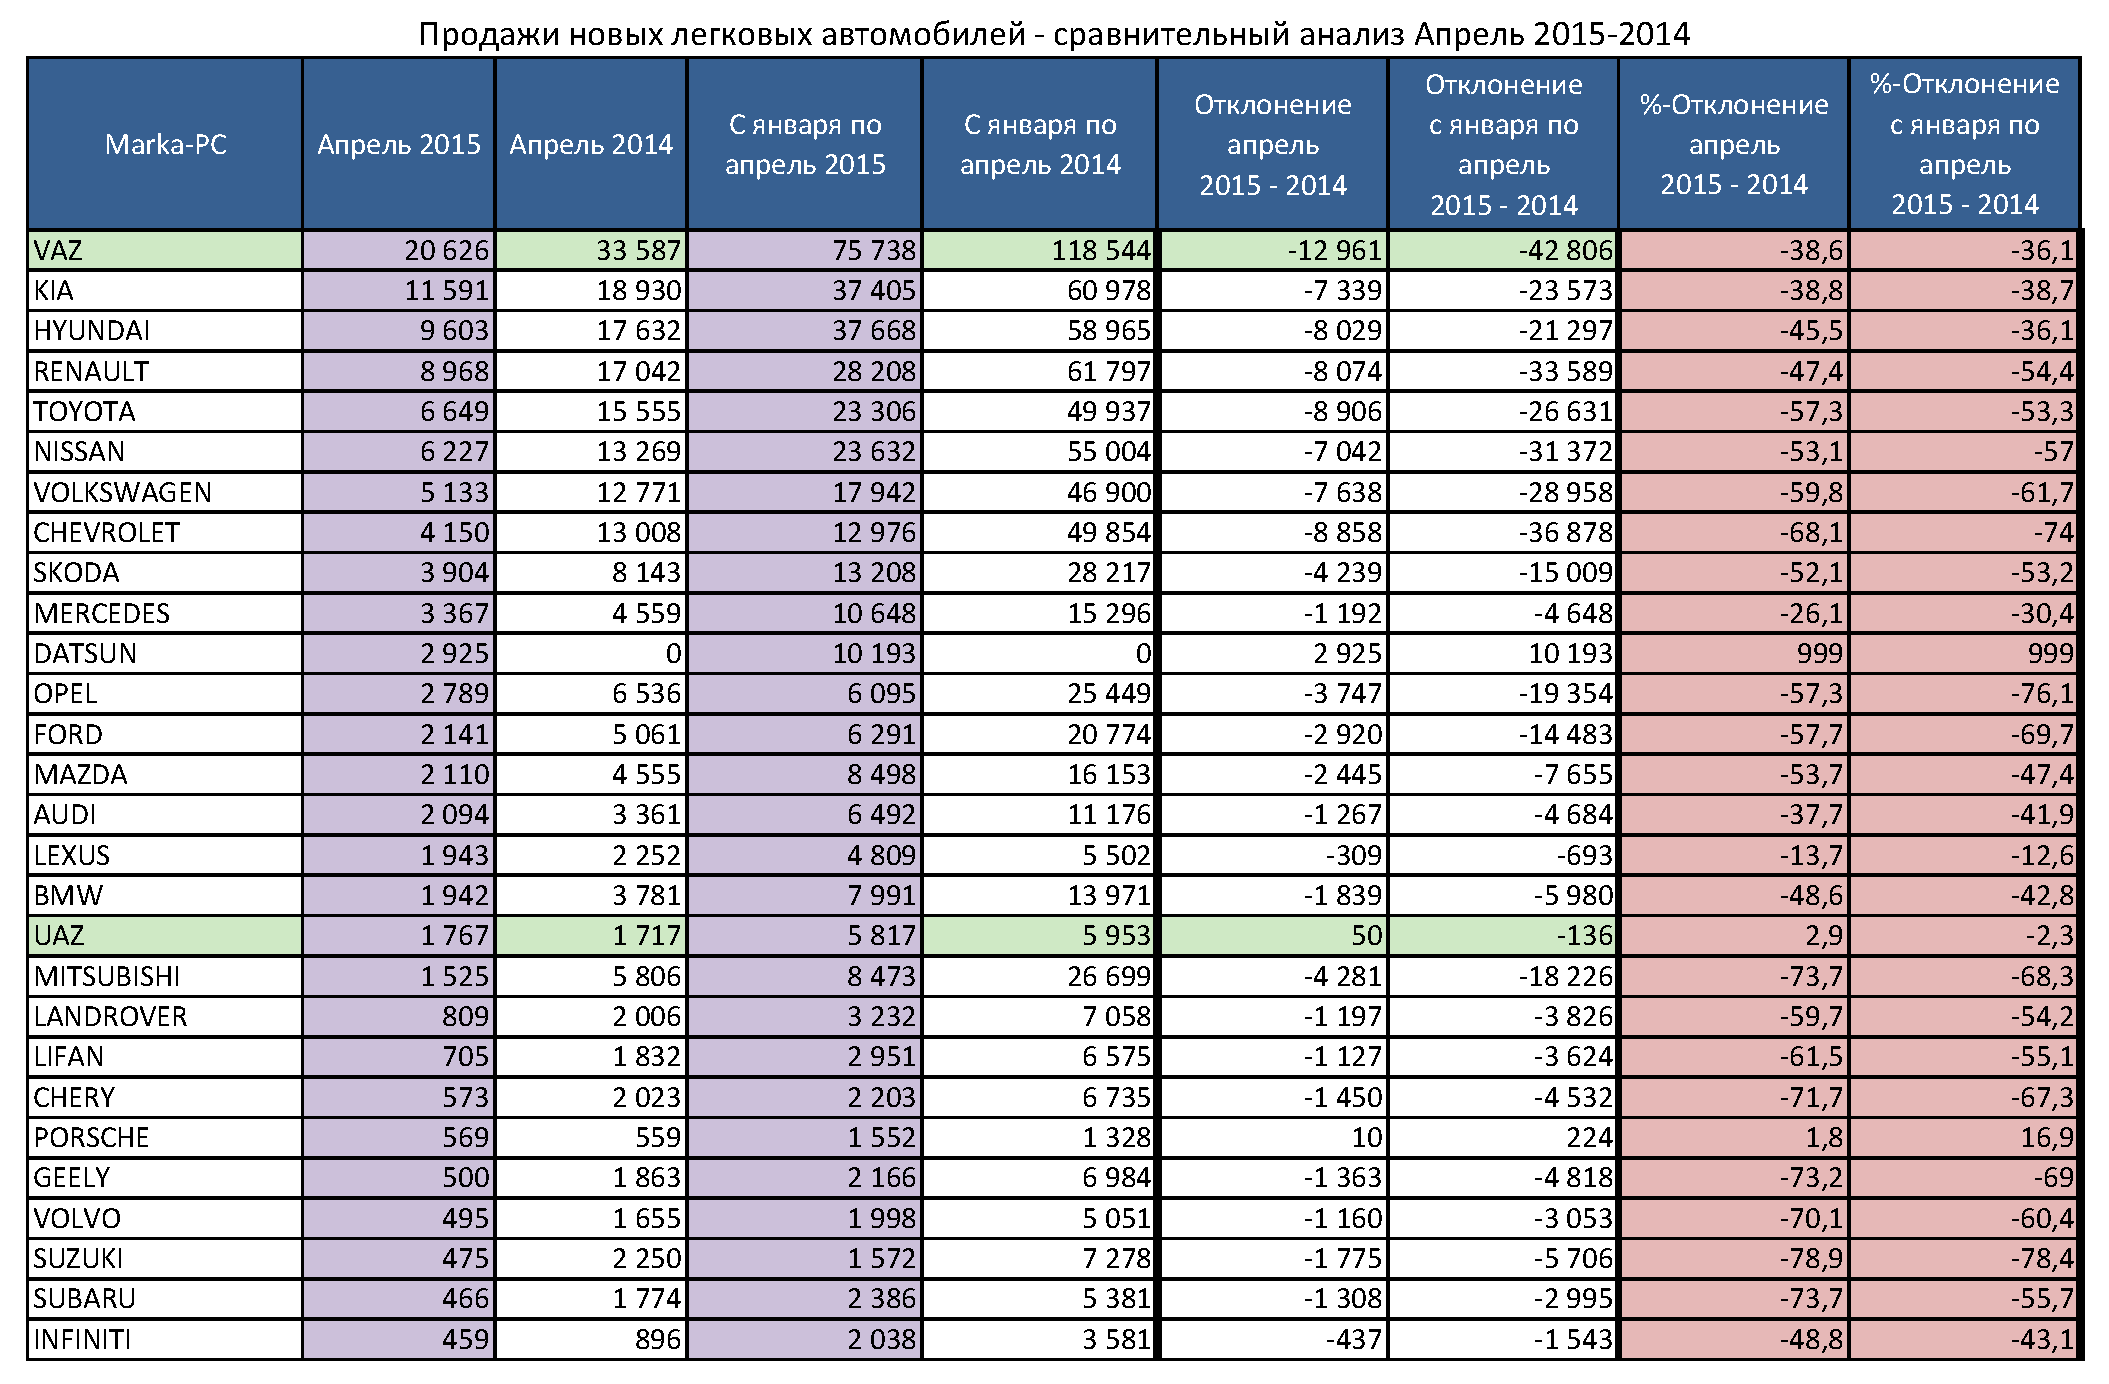 Таблица продажи автомобилей